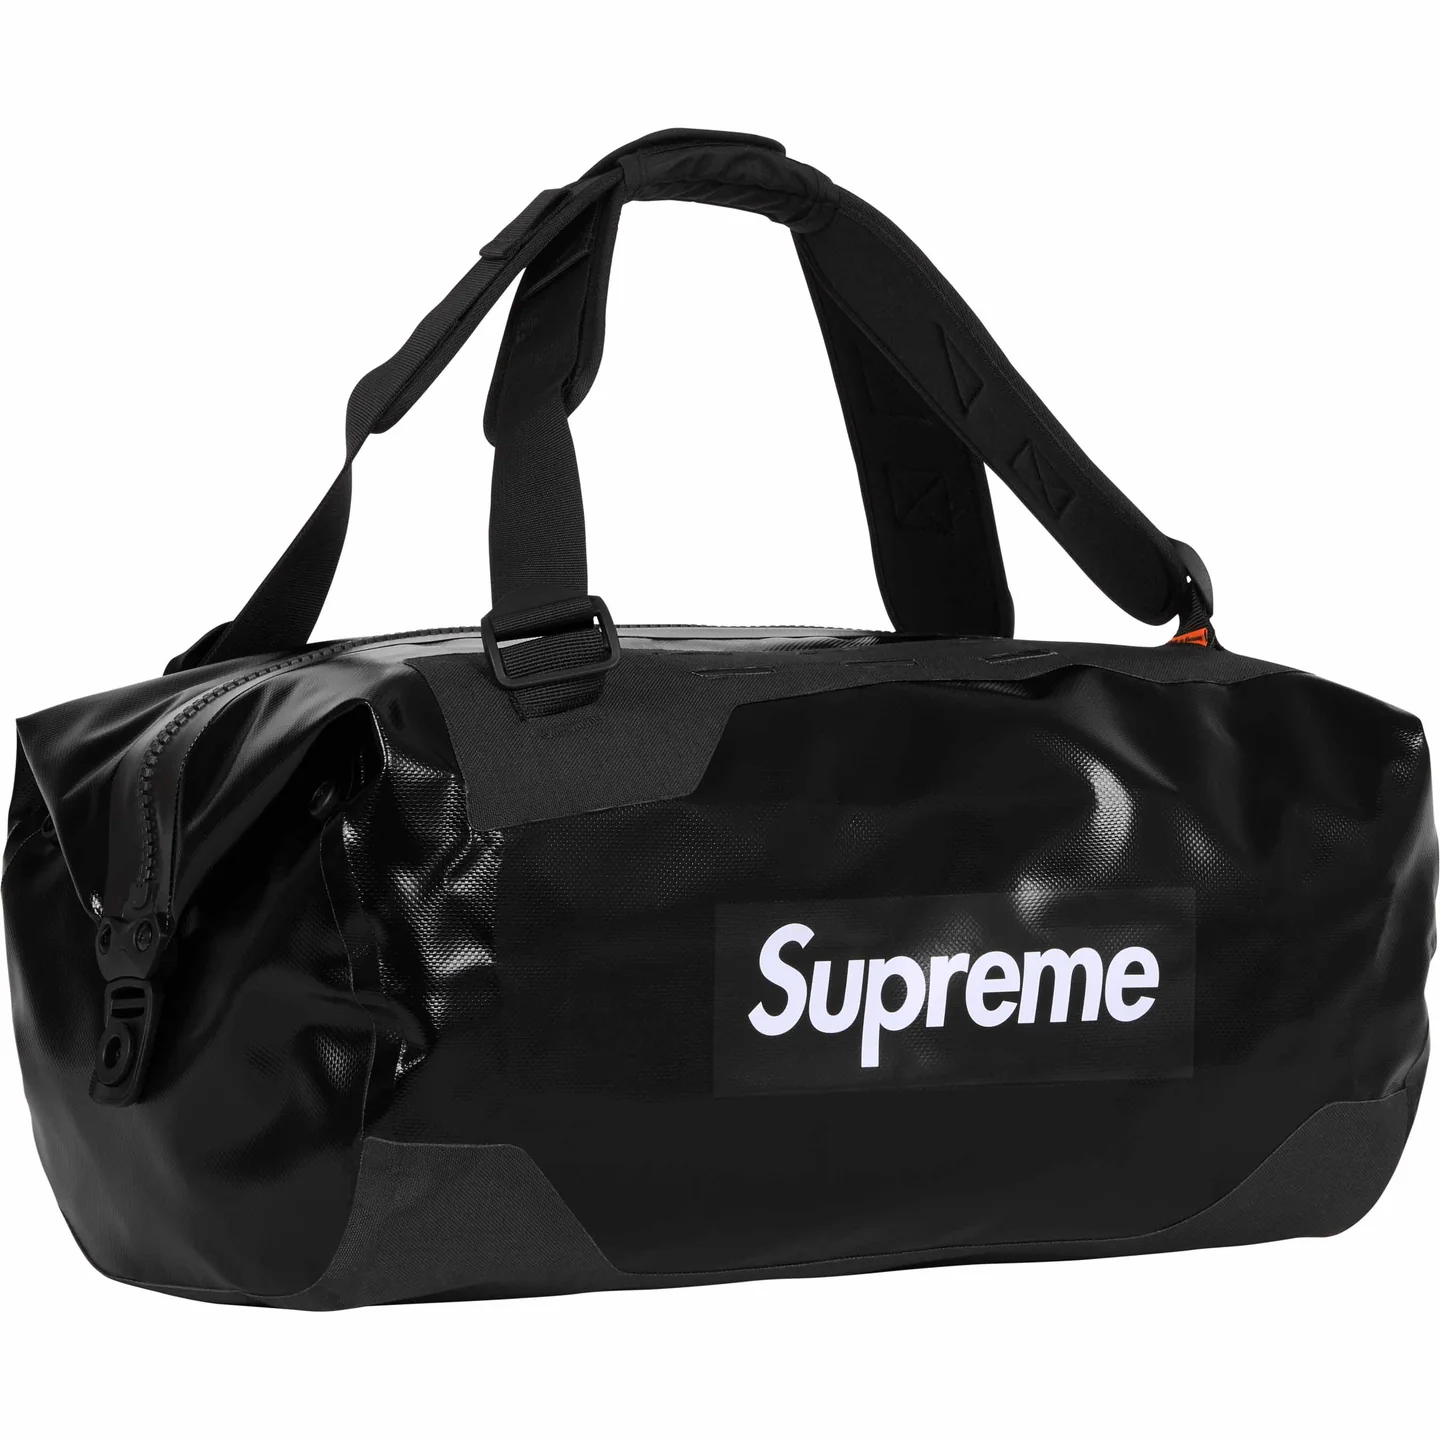 Supreme®/ORTLIEB Duffle Bag | Supreme 24ss